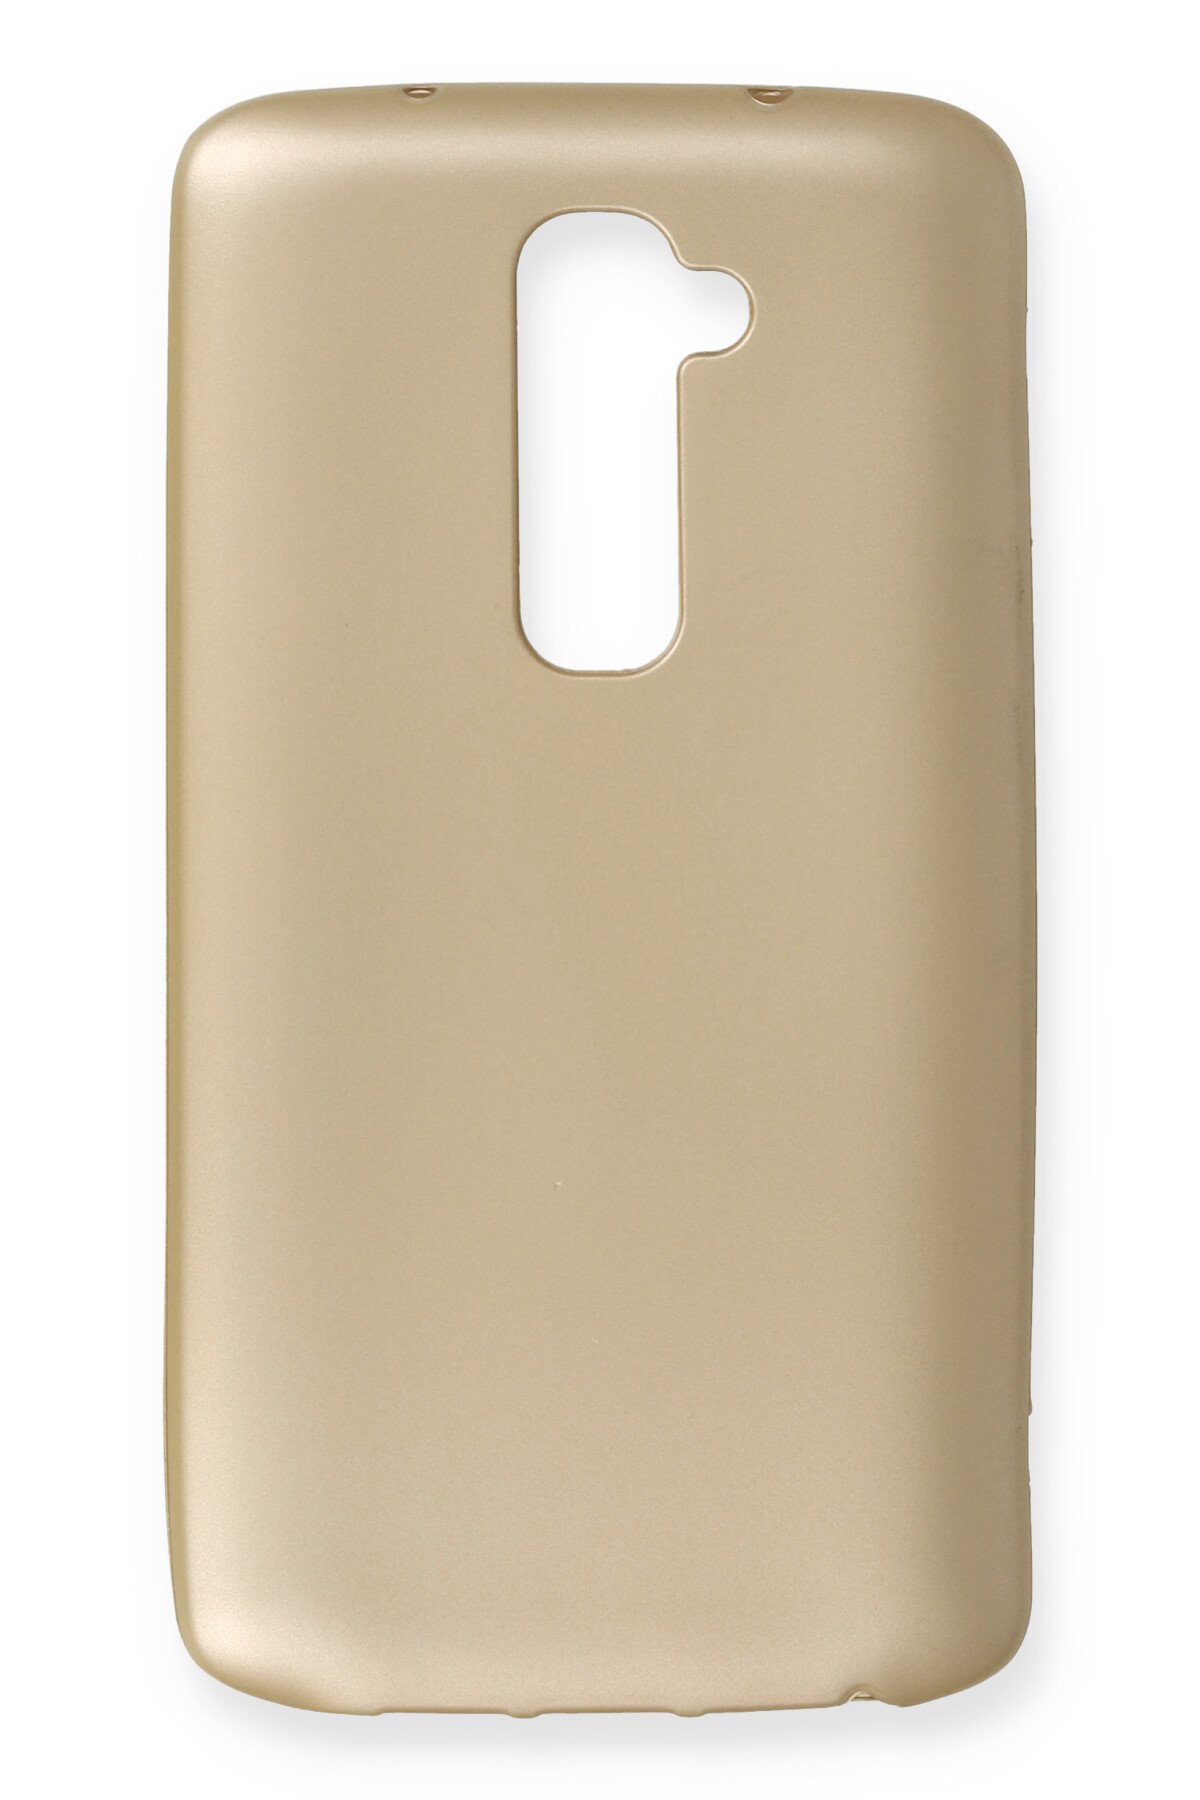 NewFace Newface LG G2 Kılıf Premium Rubber Silikon - Gold